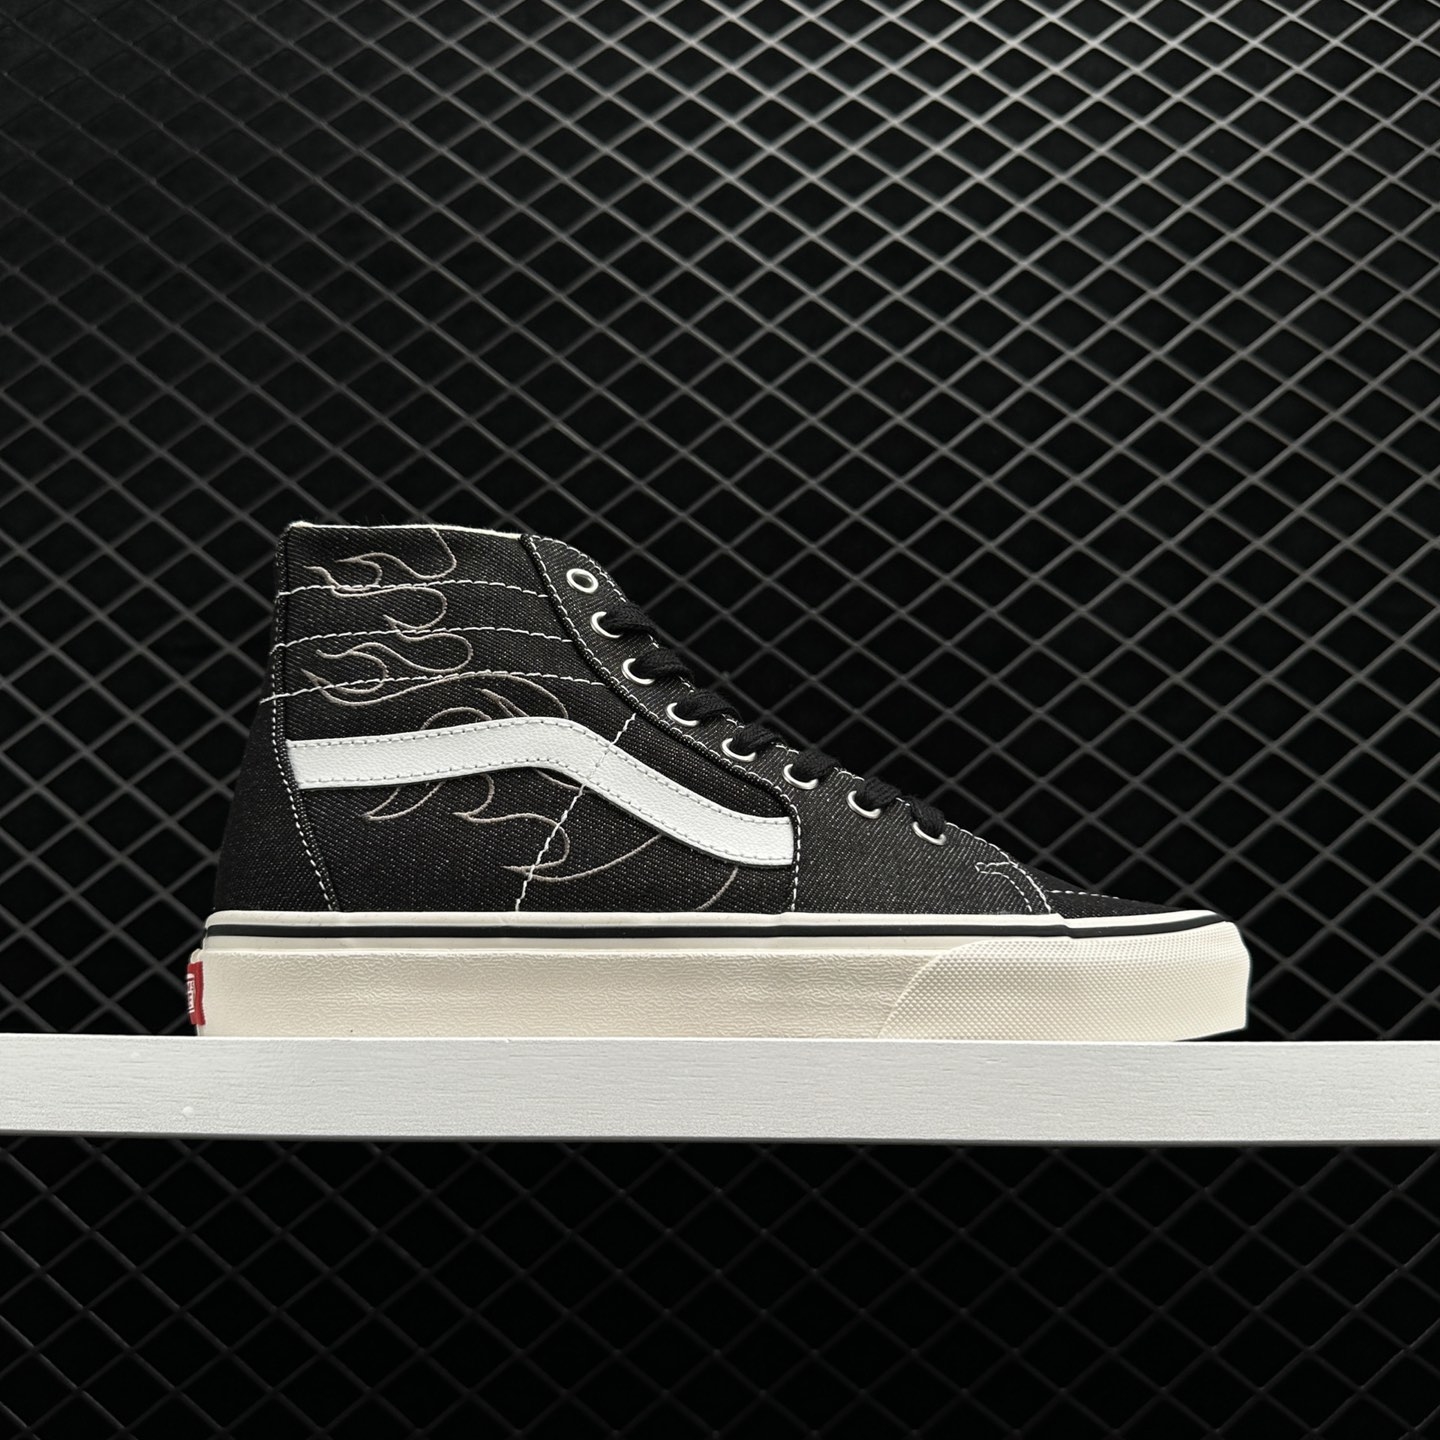 Vans SK8-HI Black White VN0A5KRUMCG: Classic High-Top Sneaker.